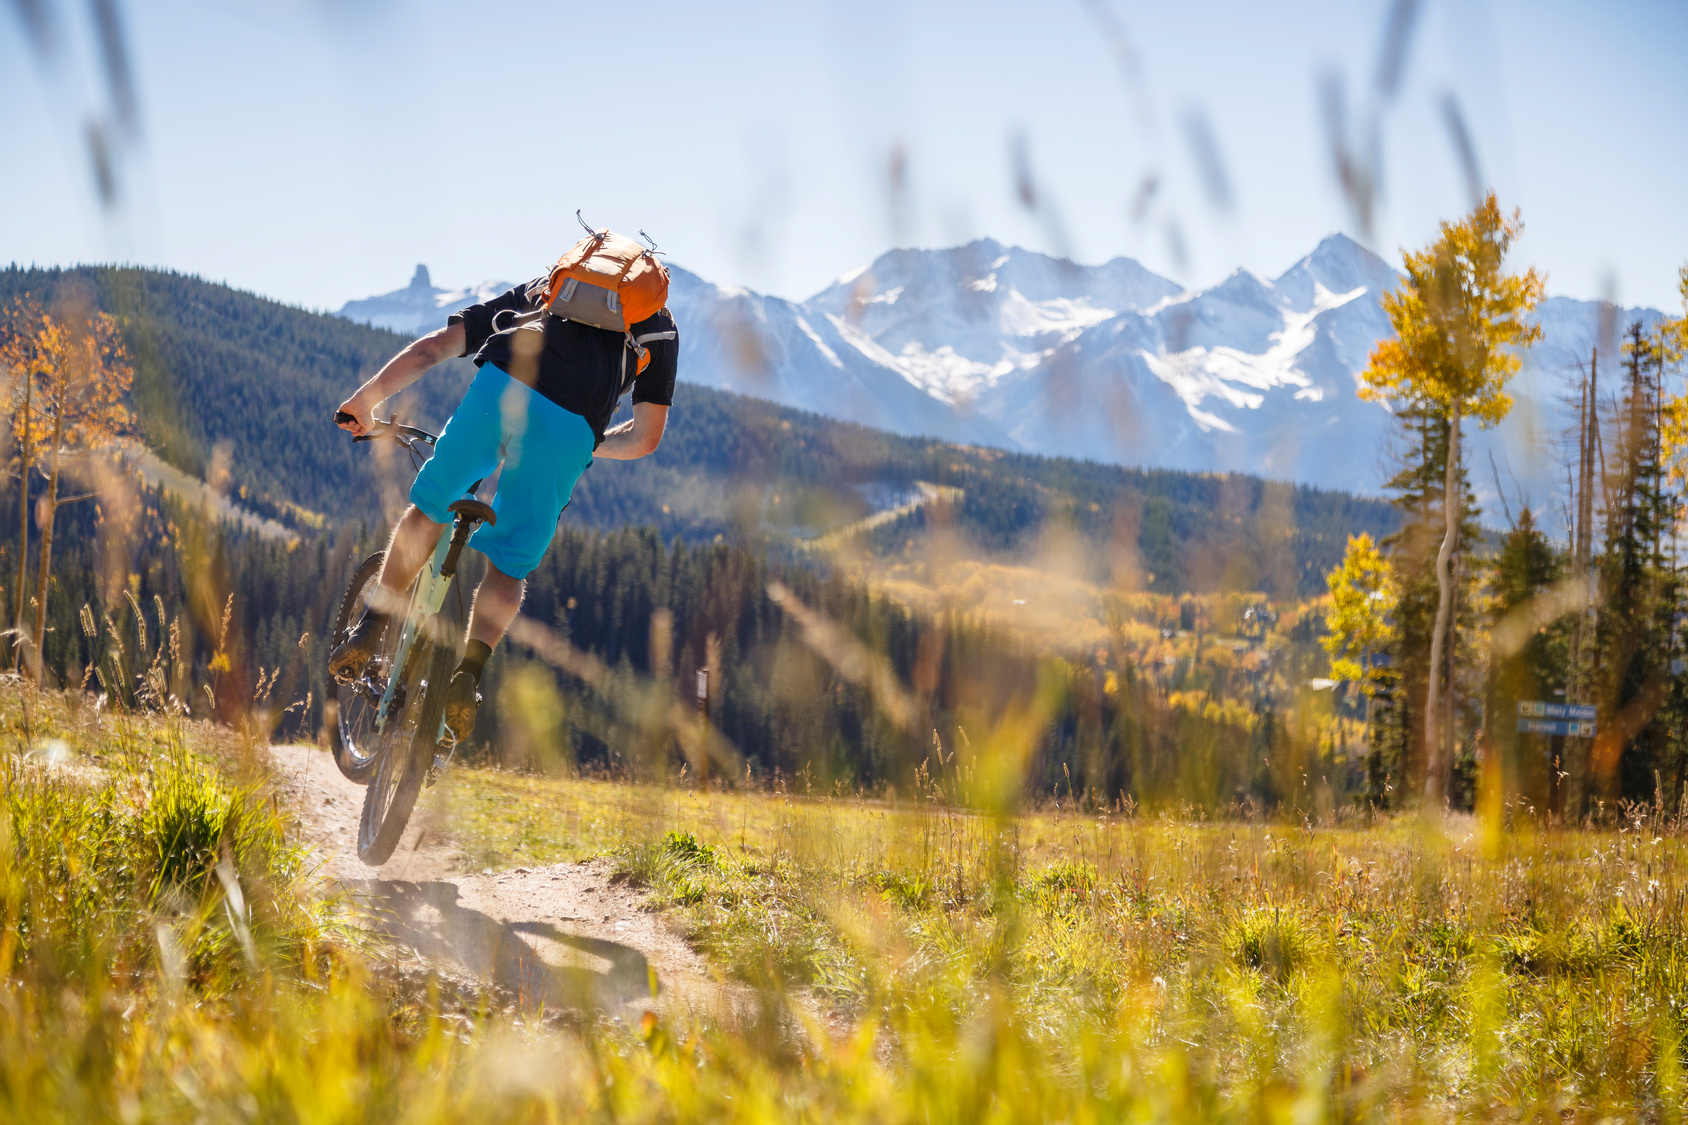 Telluride, Colorado, USA: A male mountain biker riding his bike